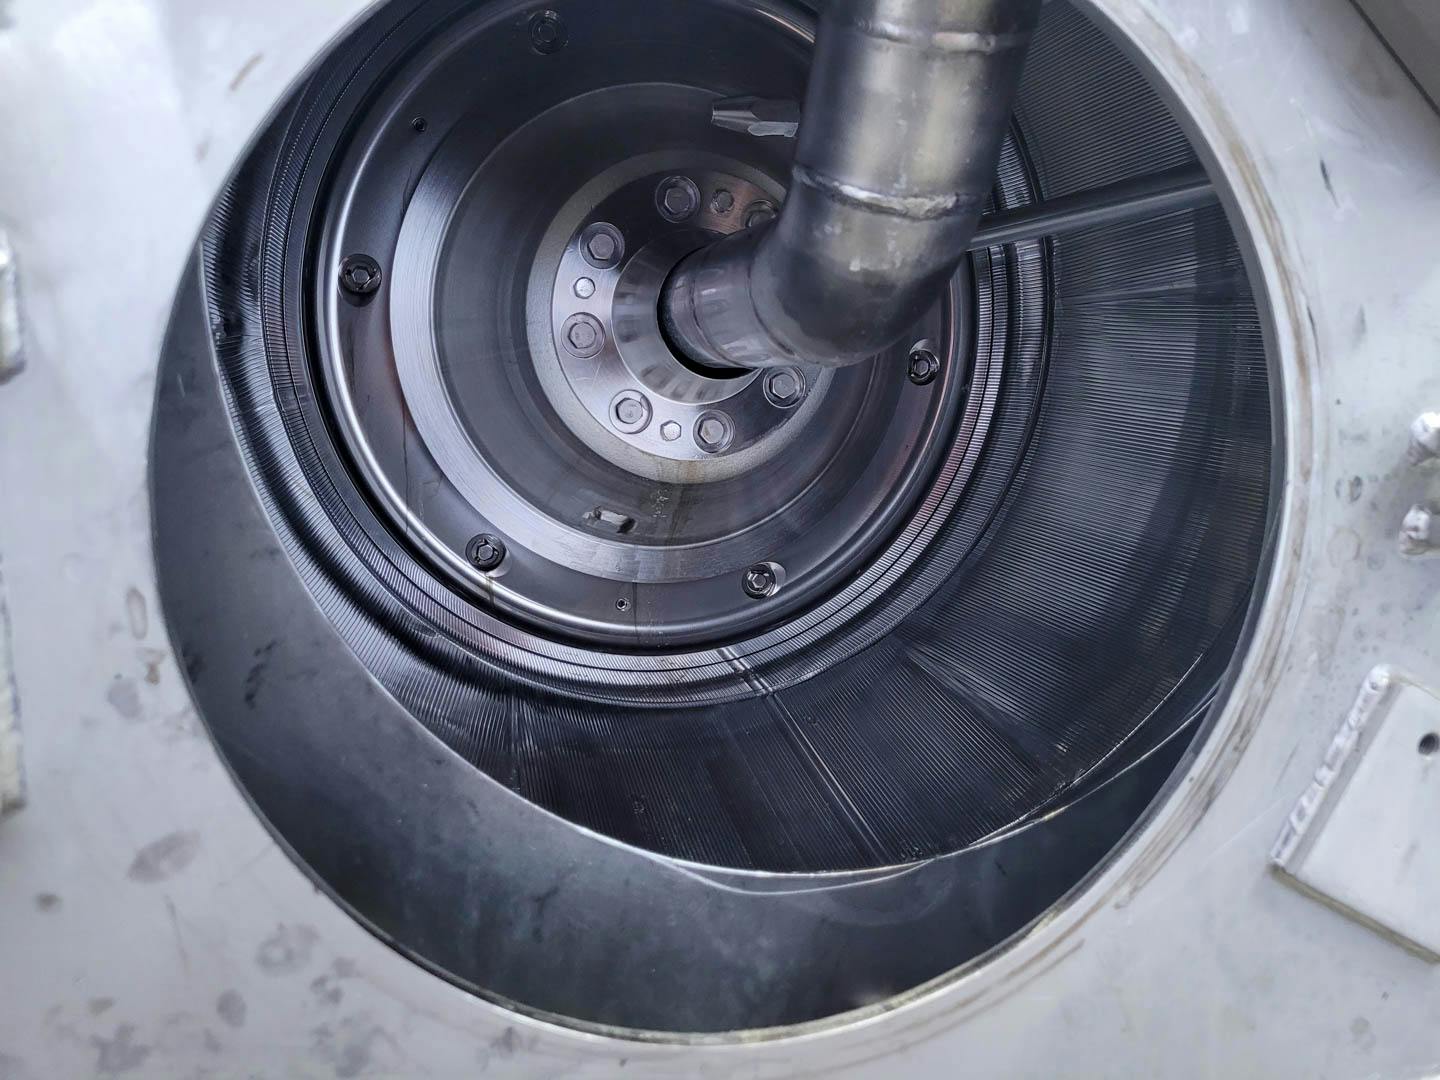 Krauss Maffei SZ 51-8 - Pusher centrifuge - image 9